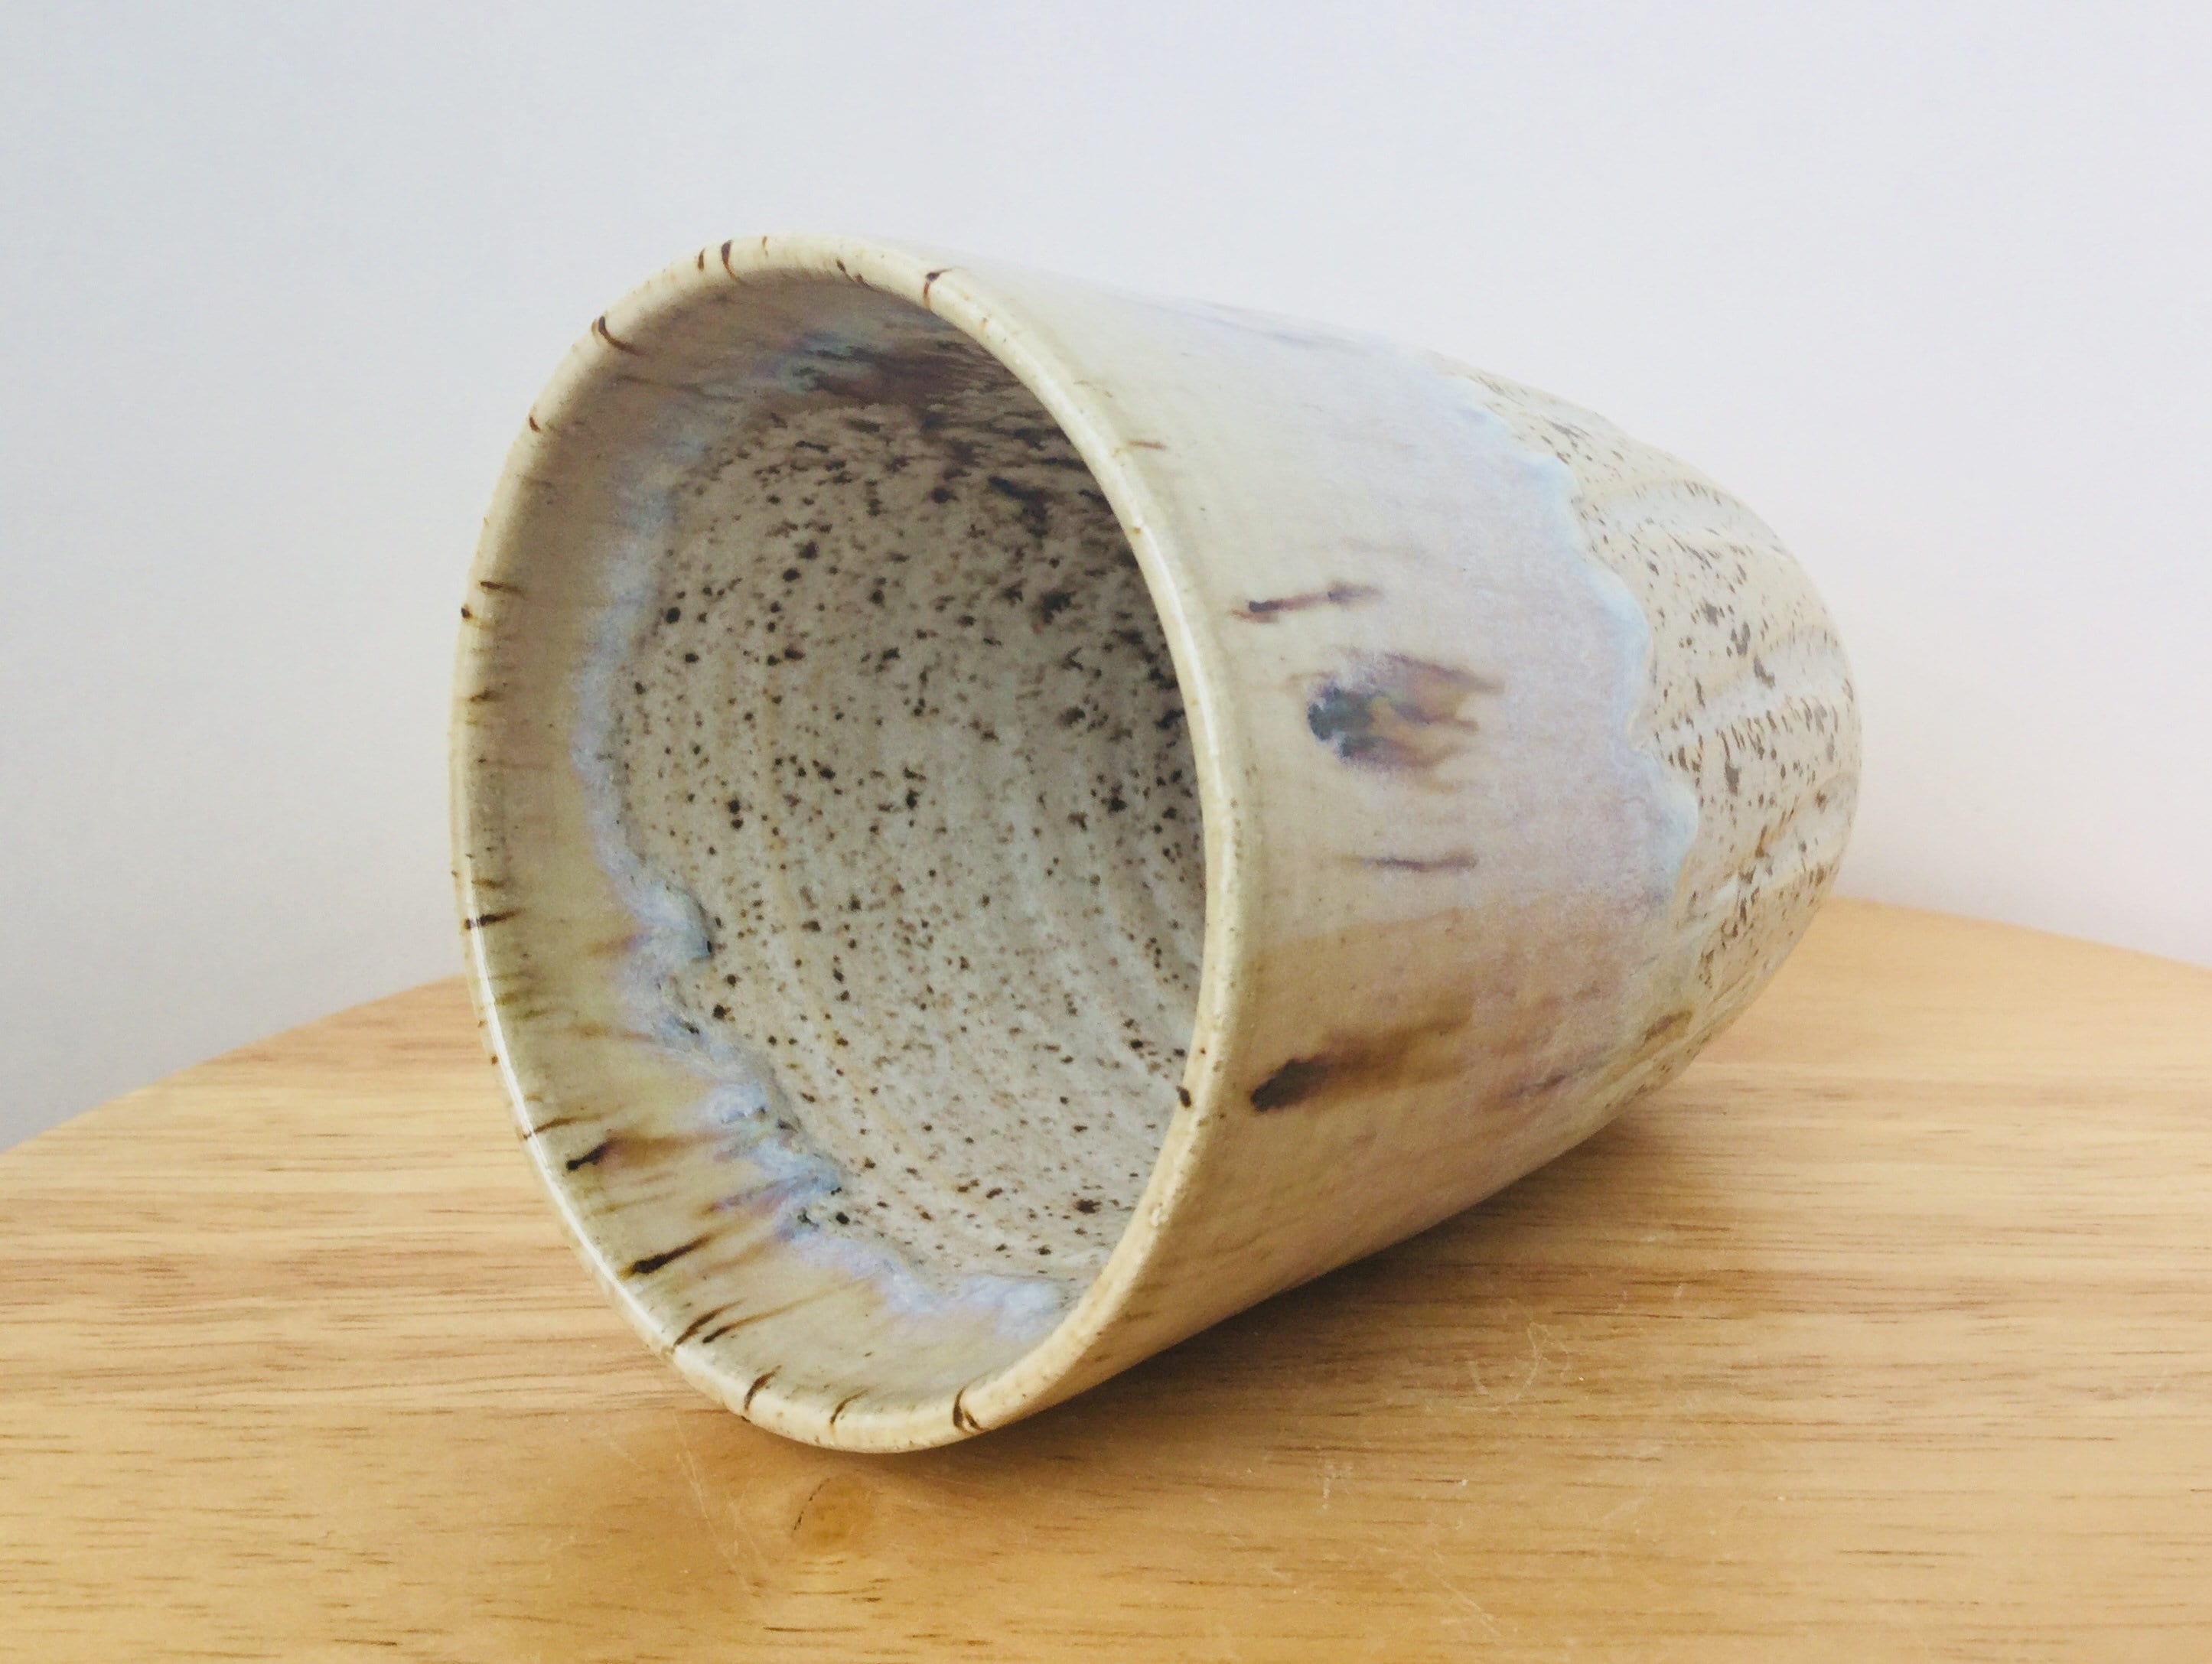 Universal To-Go Lid by PortaVia – Saltstone Ceramics